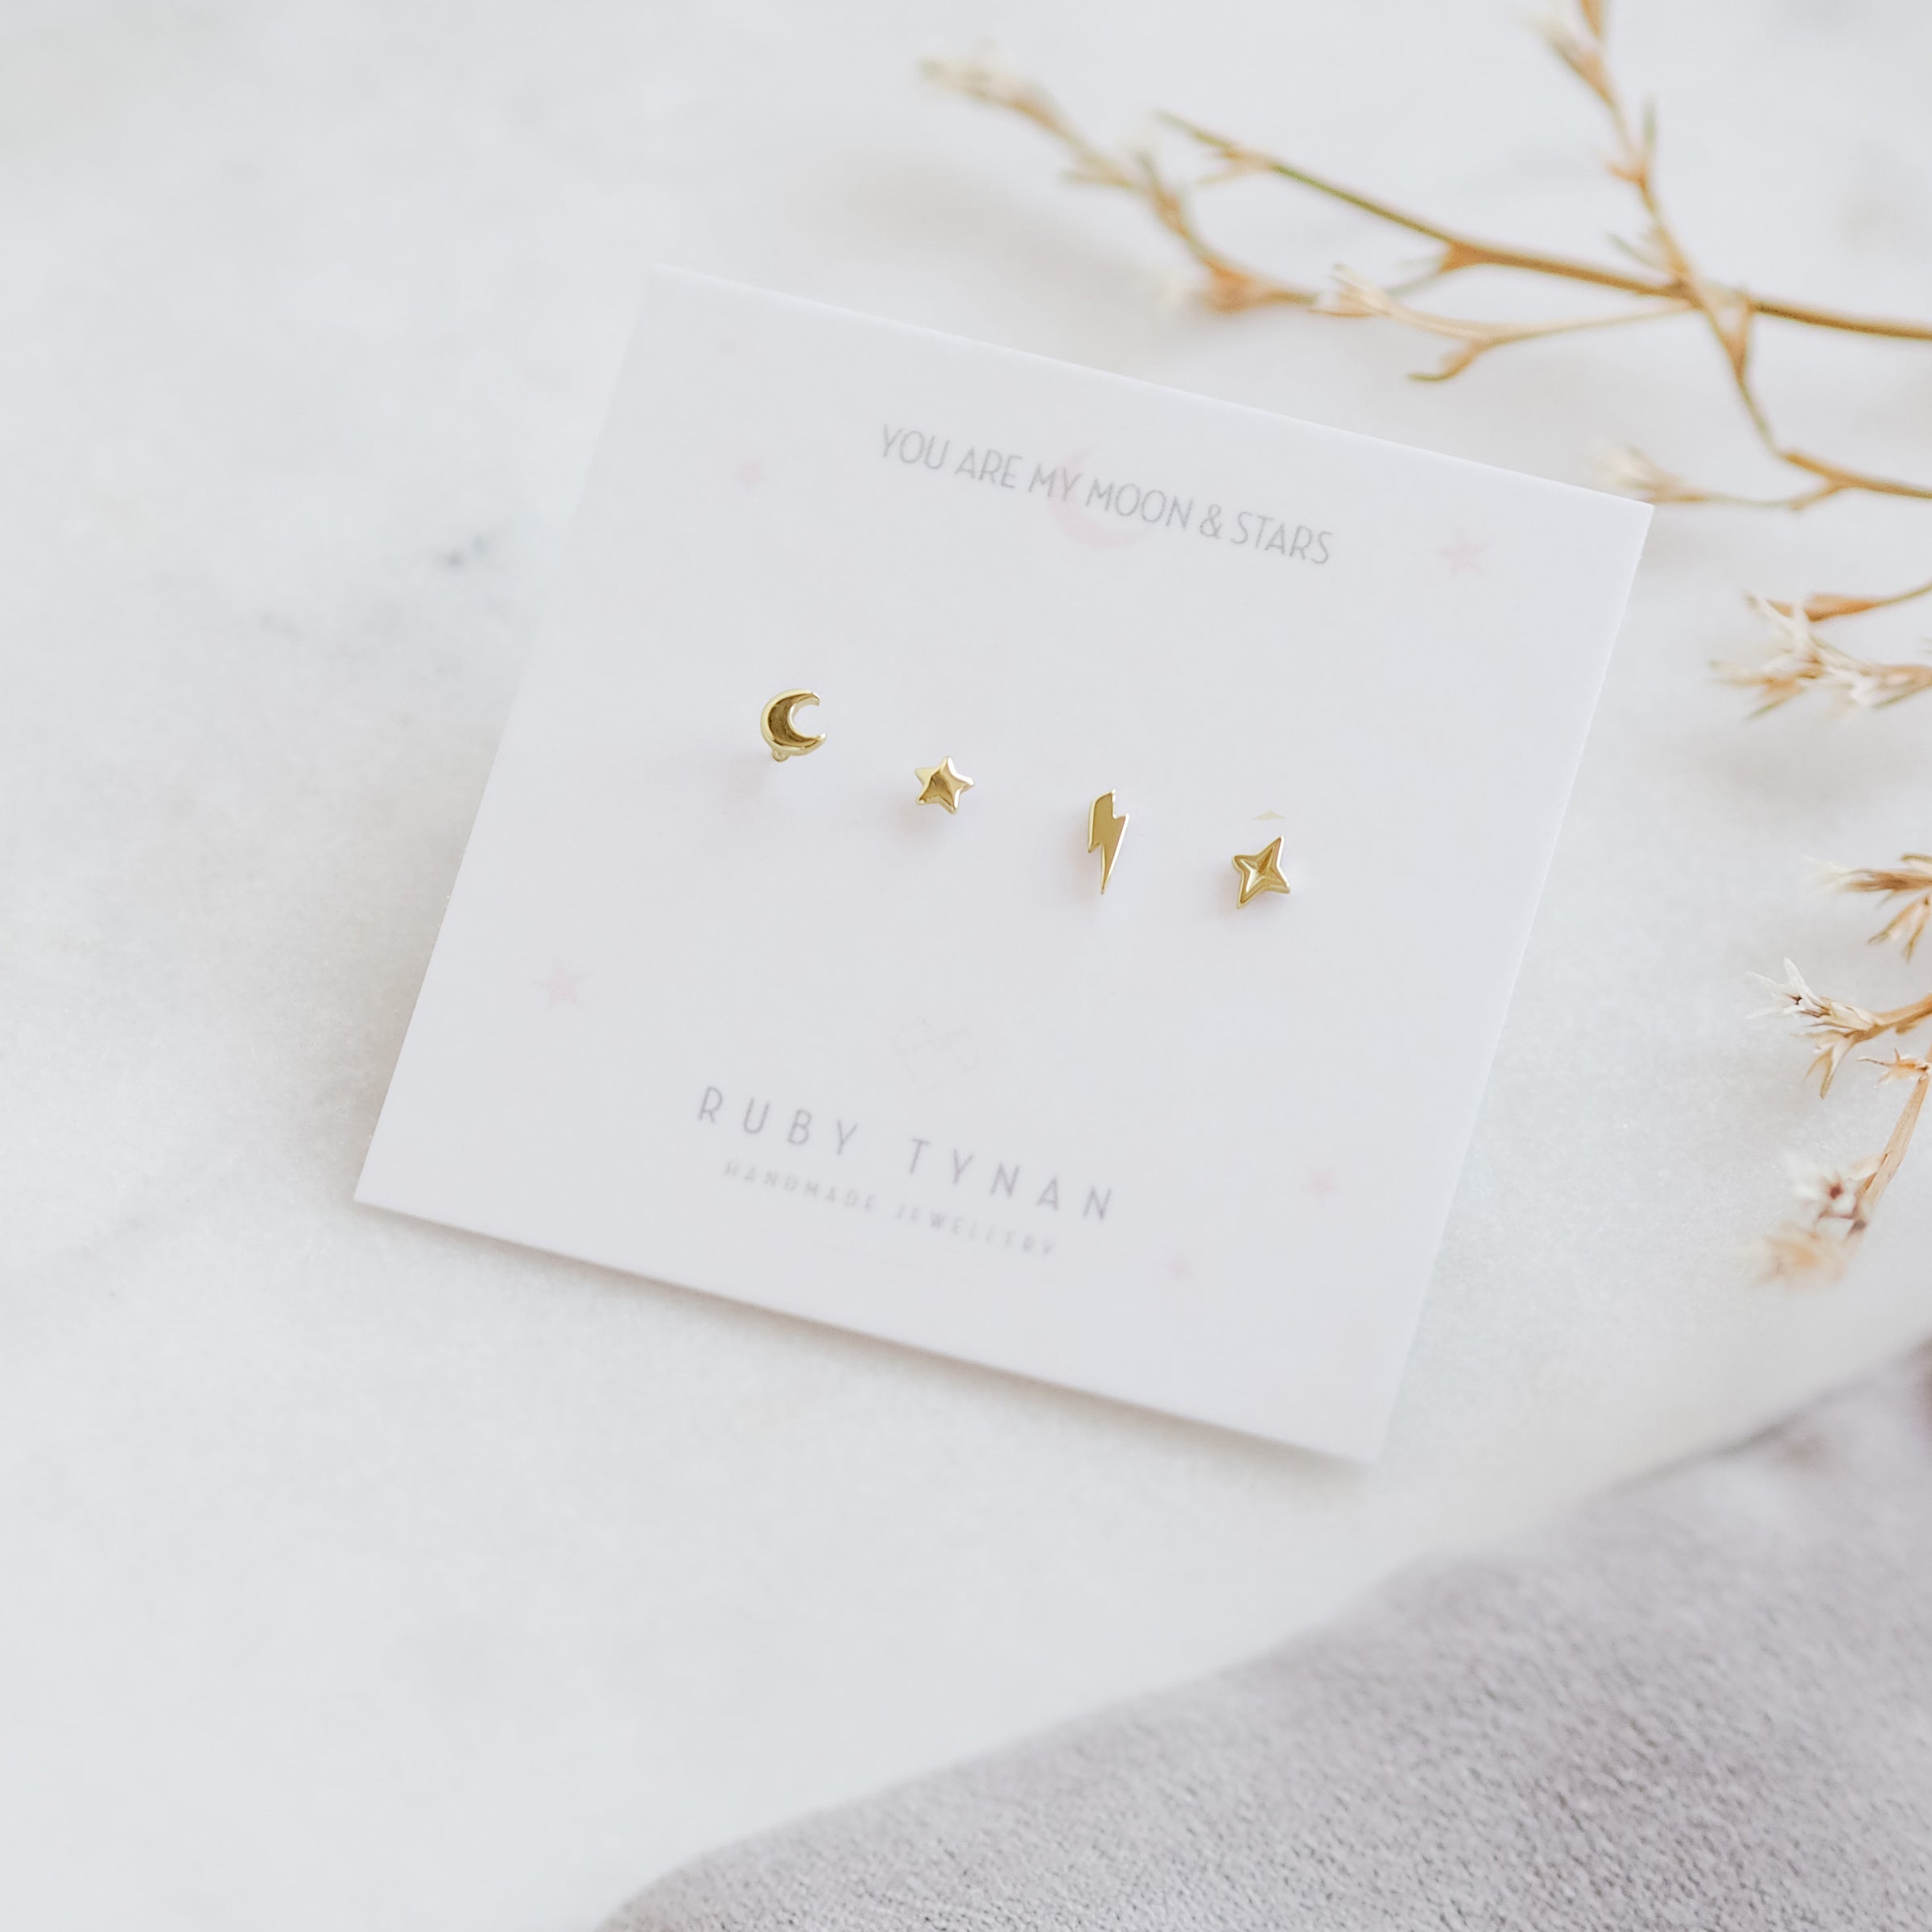 Tiny 9ct Gold Celestial Stud Earrings